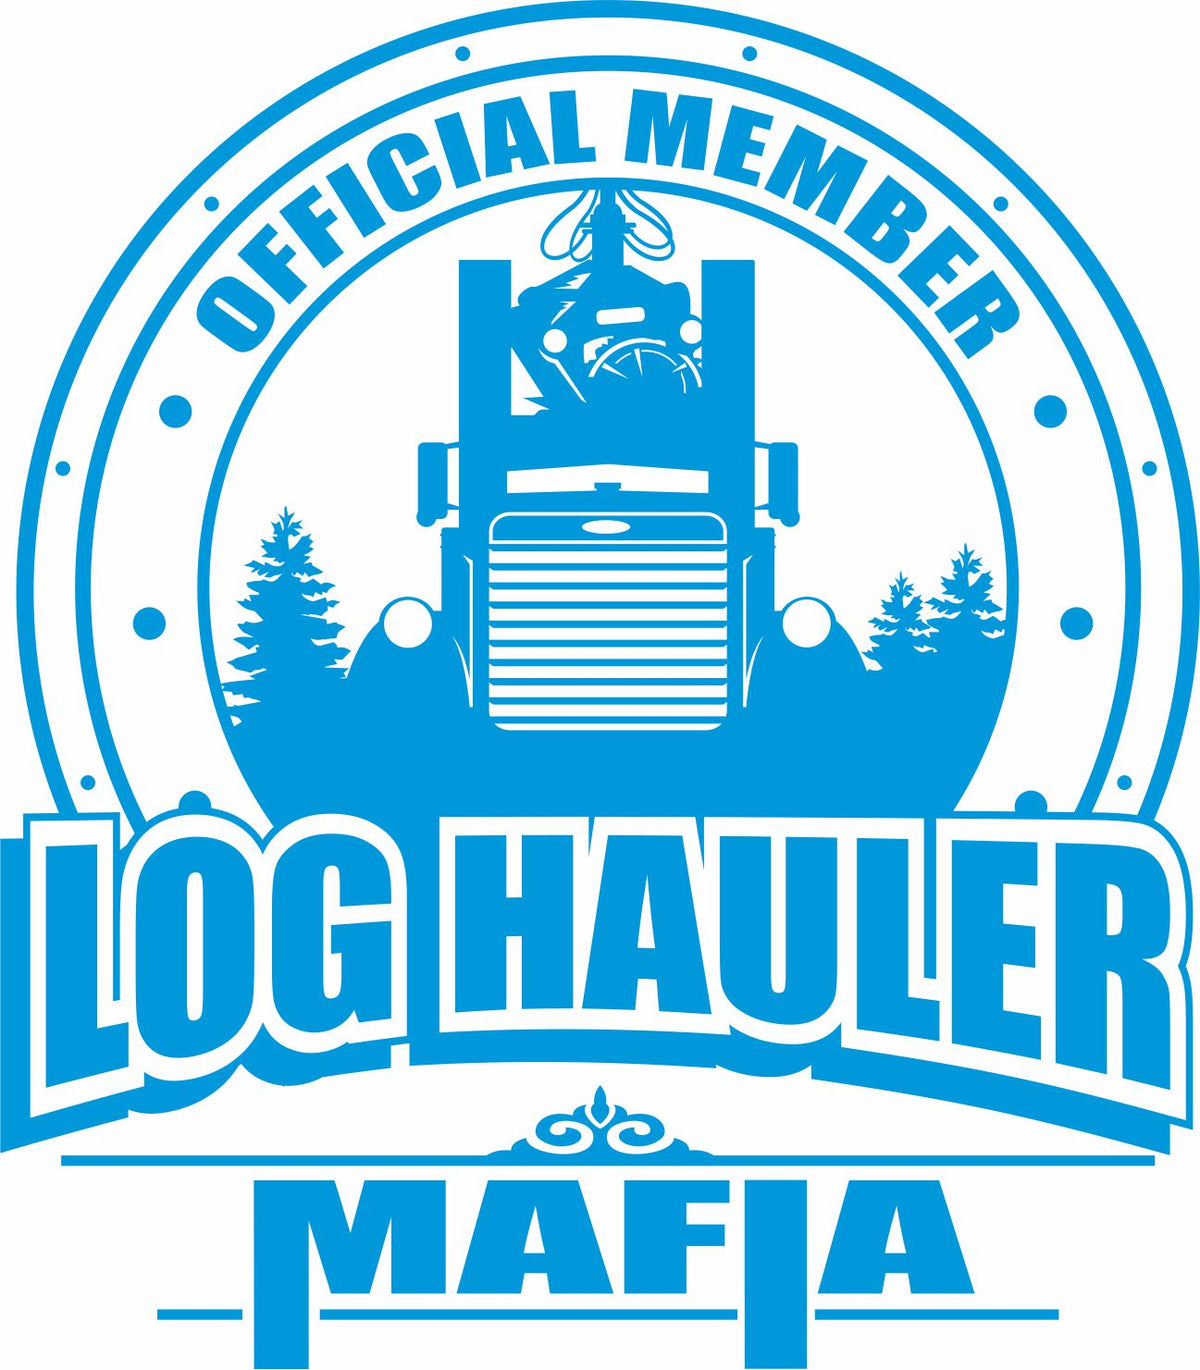 Log Hauler Mafia Pete Vinyl Decal Free Shipping